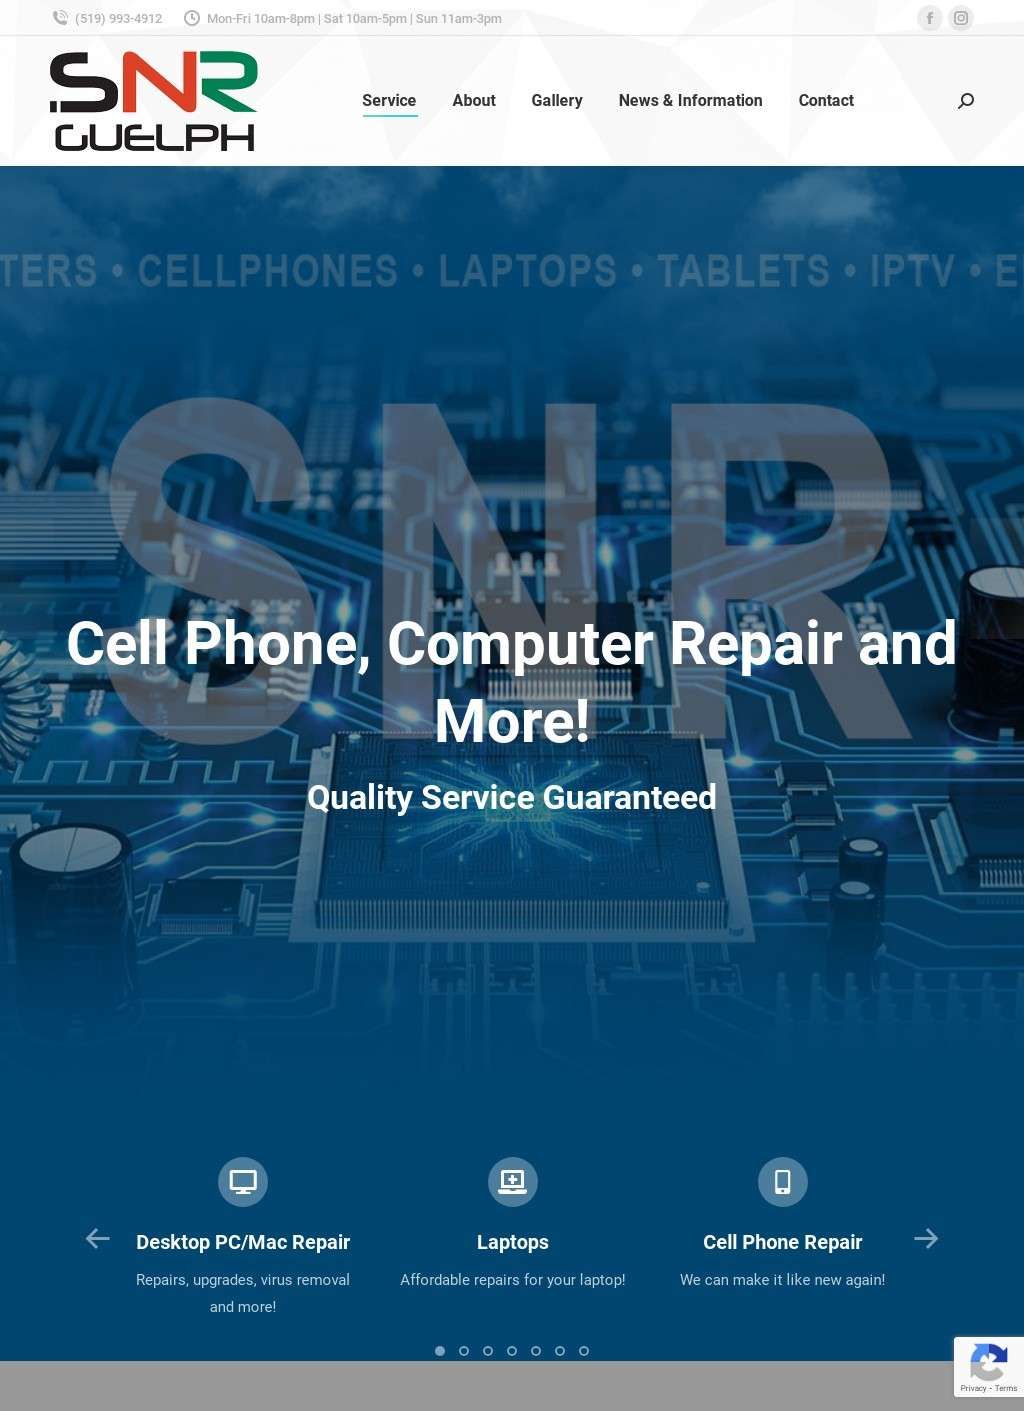 SNR Guelph PC/Macbook and Cellphone Repair